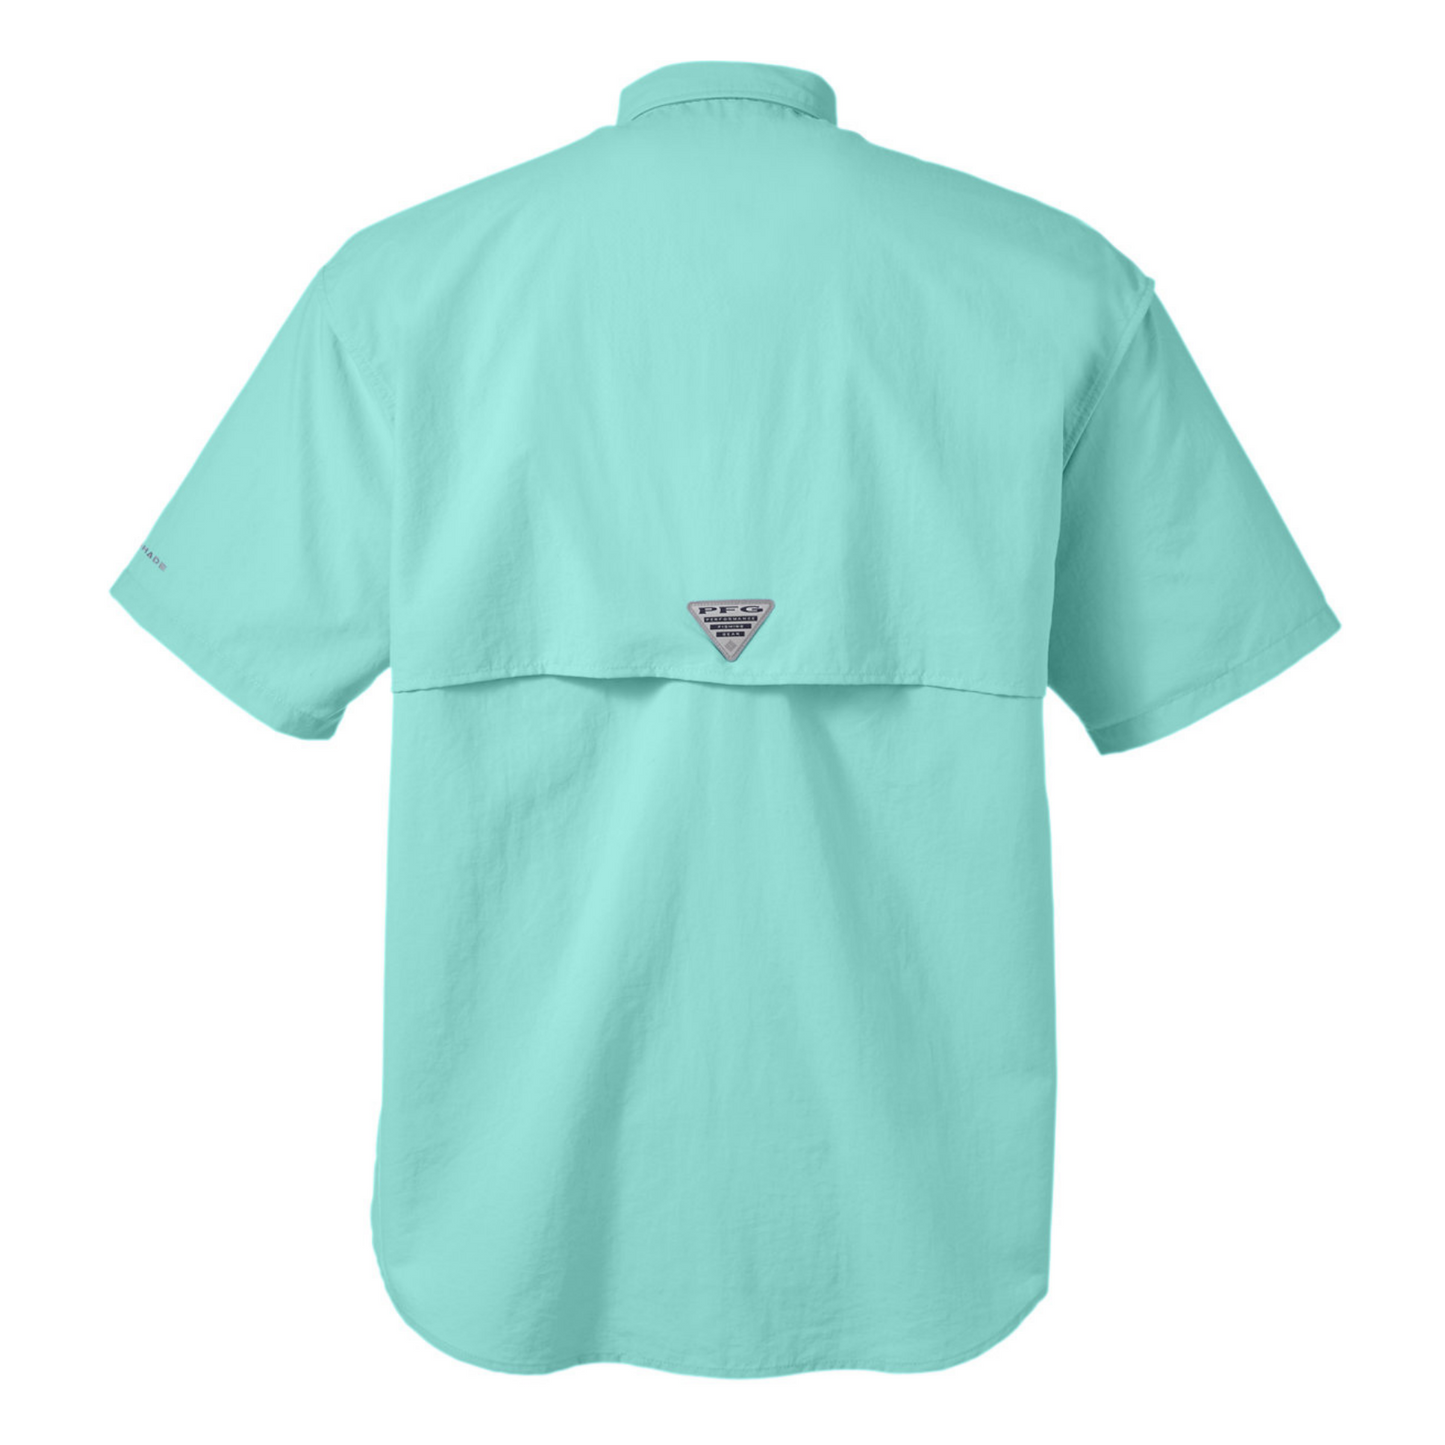 Columbia PFG Omni-Shade Fishing Shirt L  Fishing shirts, Columbia pfg,  Clothes design